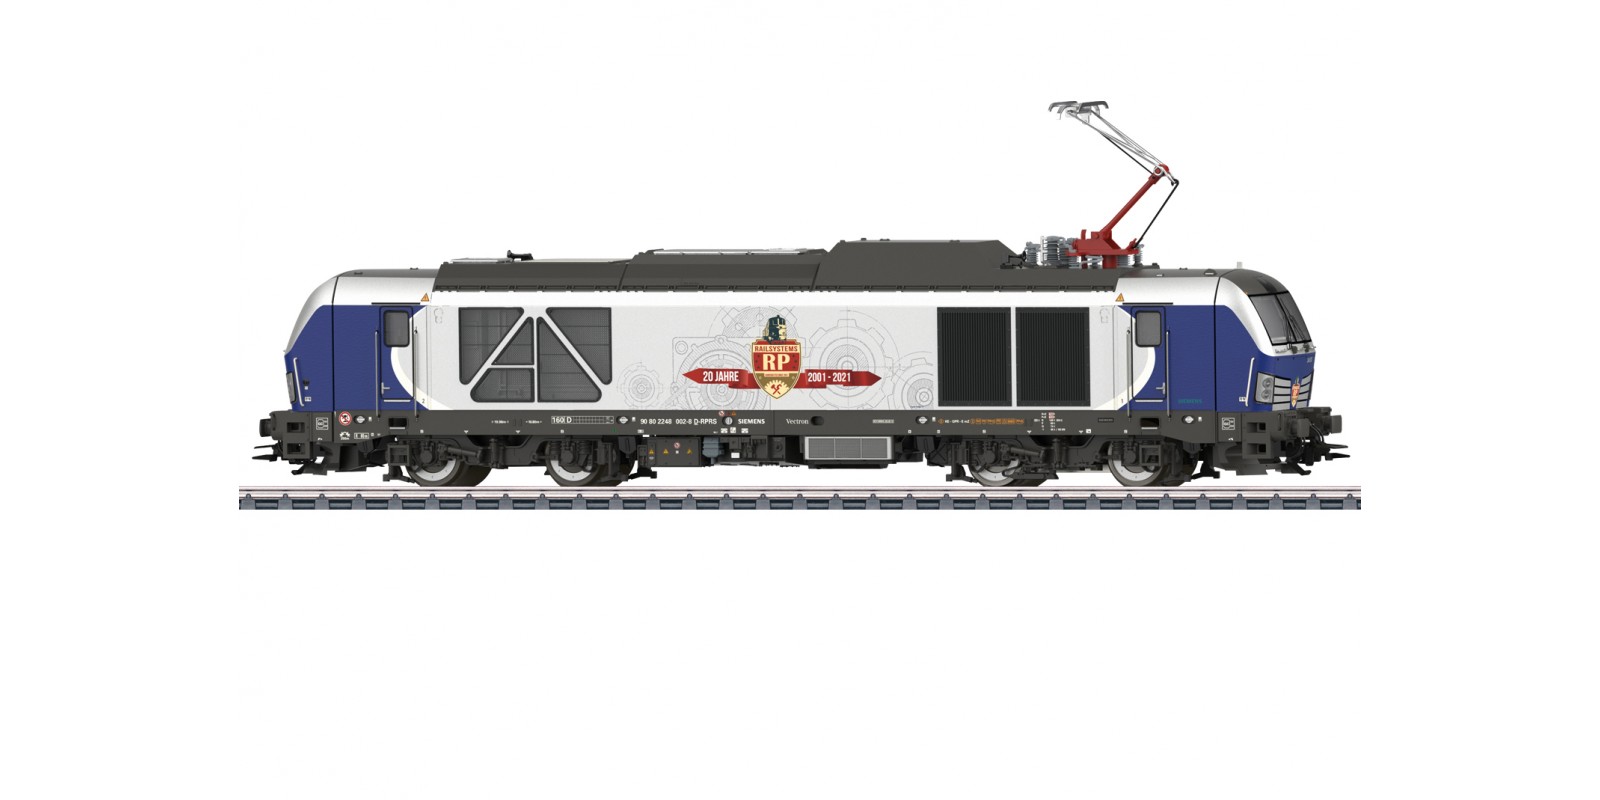 39291 Class 248 Dual Power Locomotive